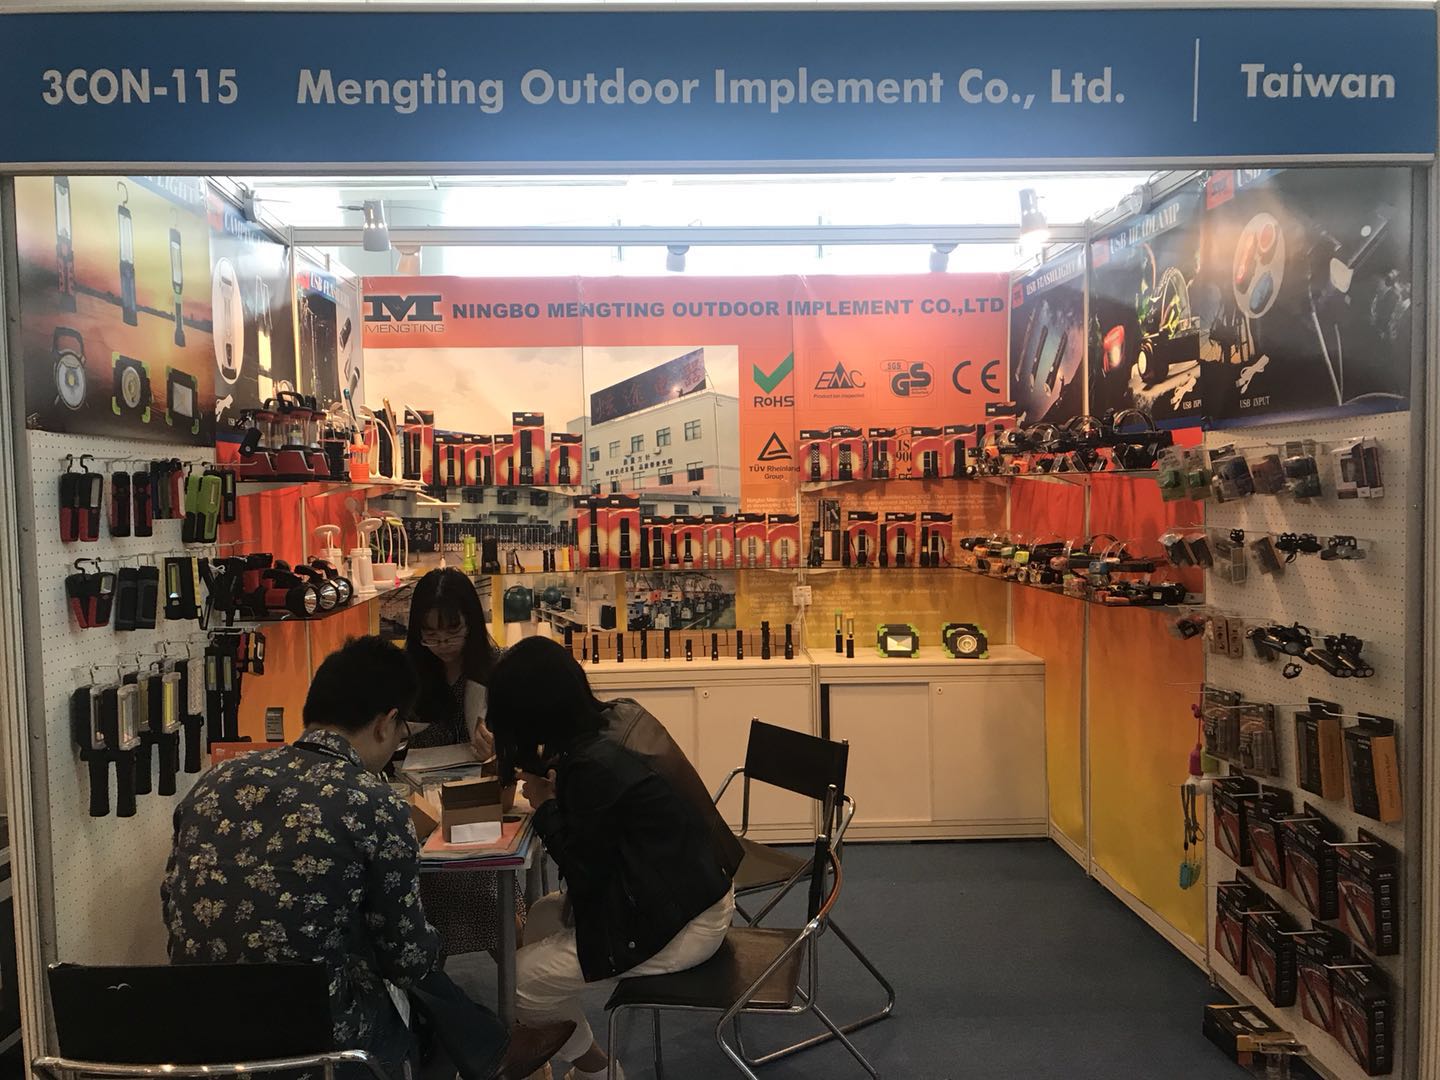 Hongkong Electronics Fair 2018-10-13to16